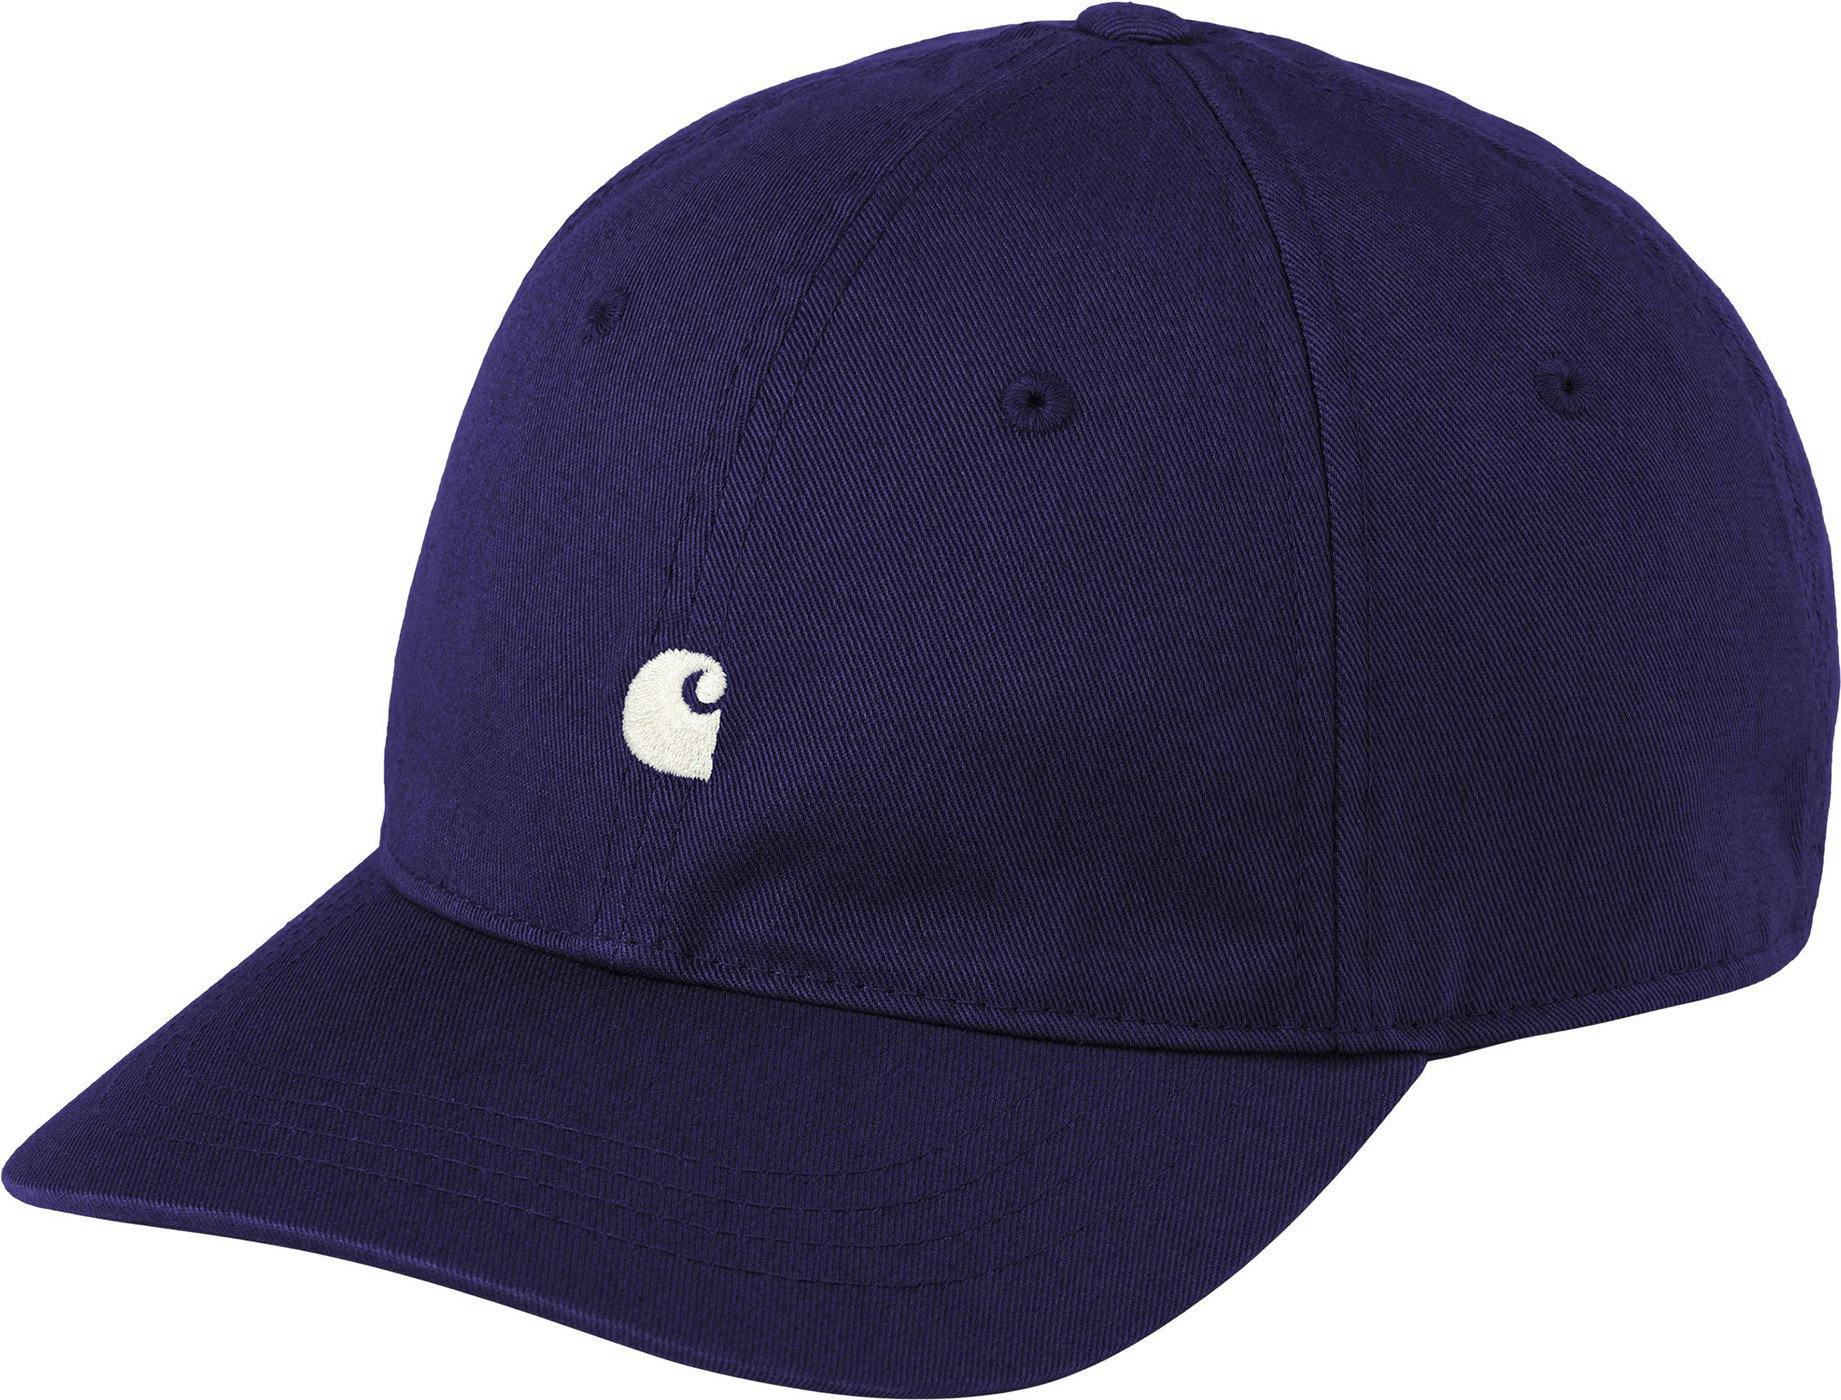 Product image for Madison Logo Cap - Men's